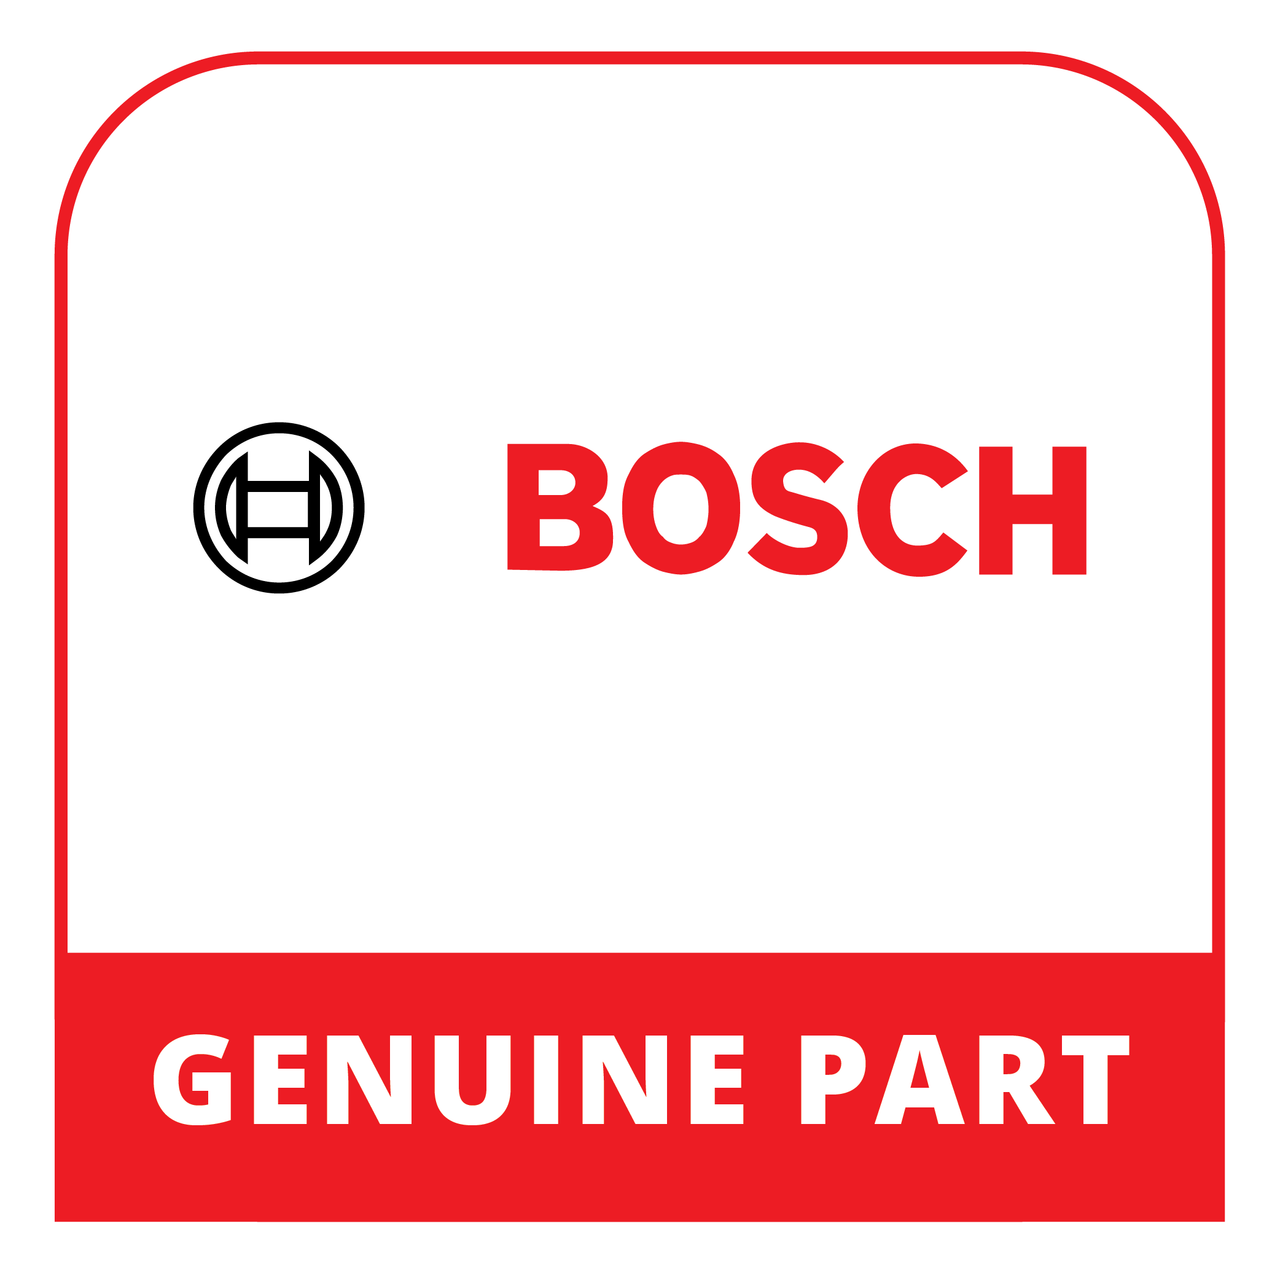 Bosch (Thermador) 00778946 - Panel-Facia - Genuine Bosch (Thermador) Part